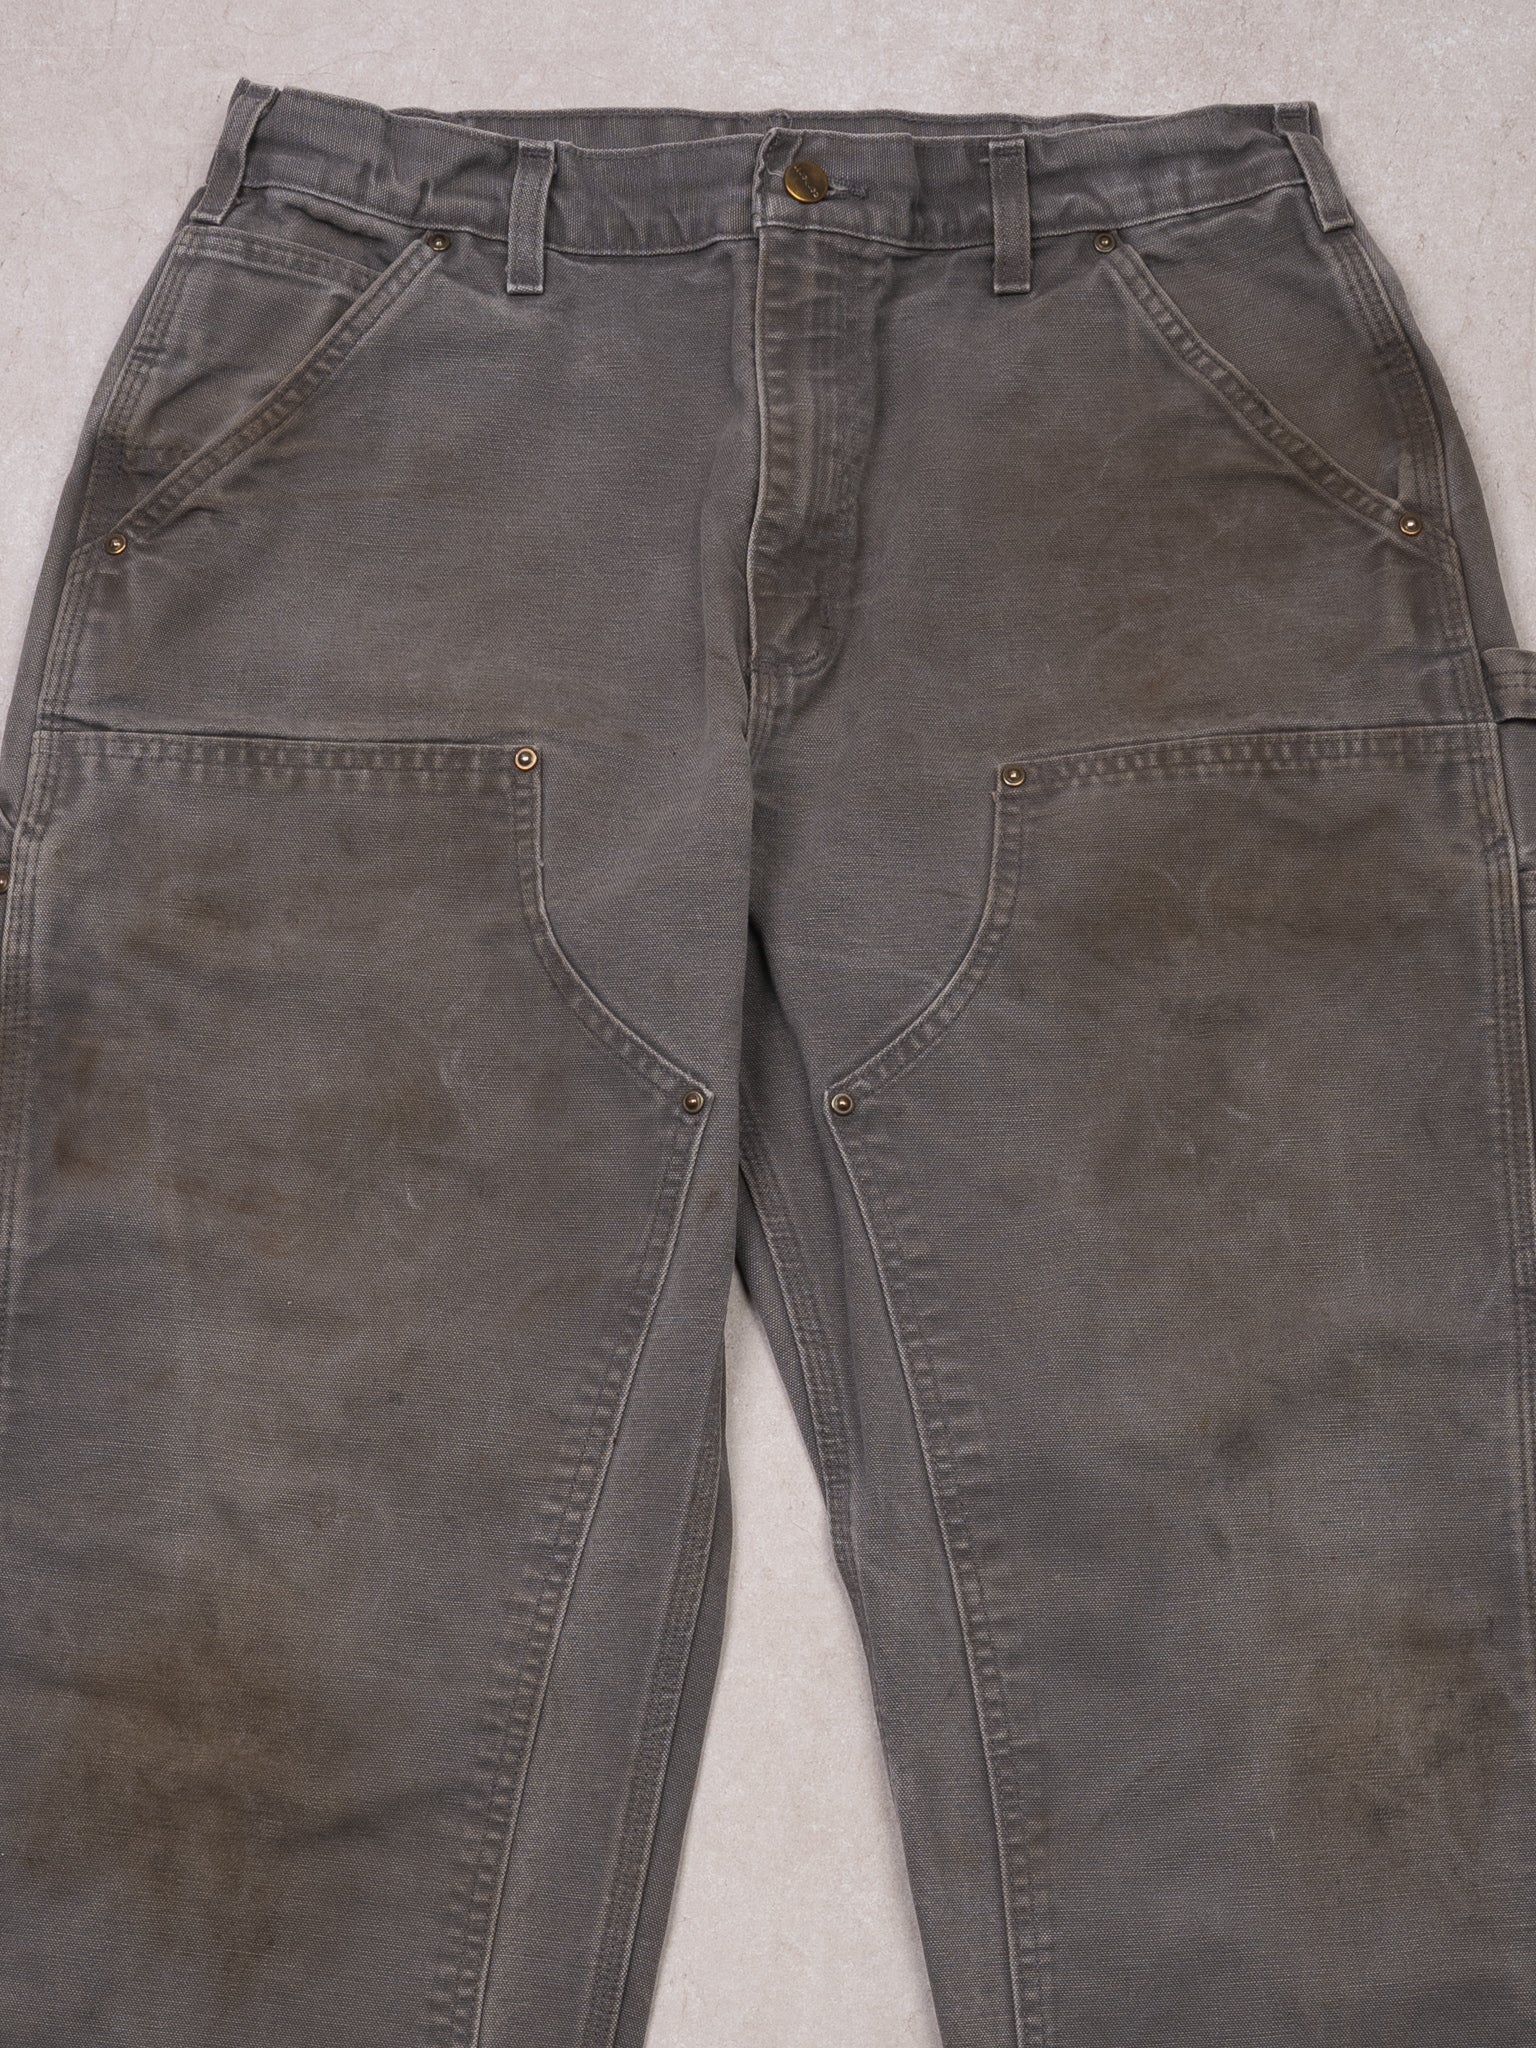 Vintage Rugged Grey Carhartt Double Knee Dungaree Cargo Pants (34 x  30)